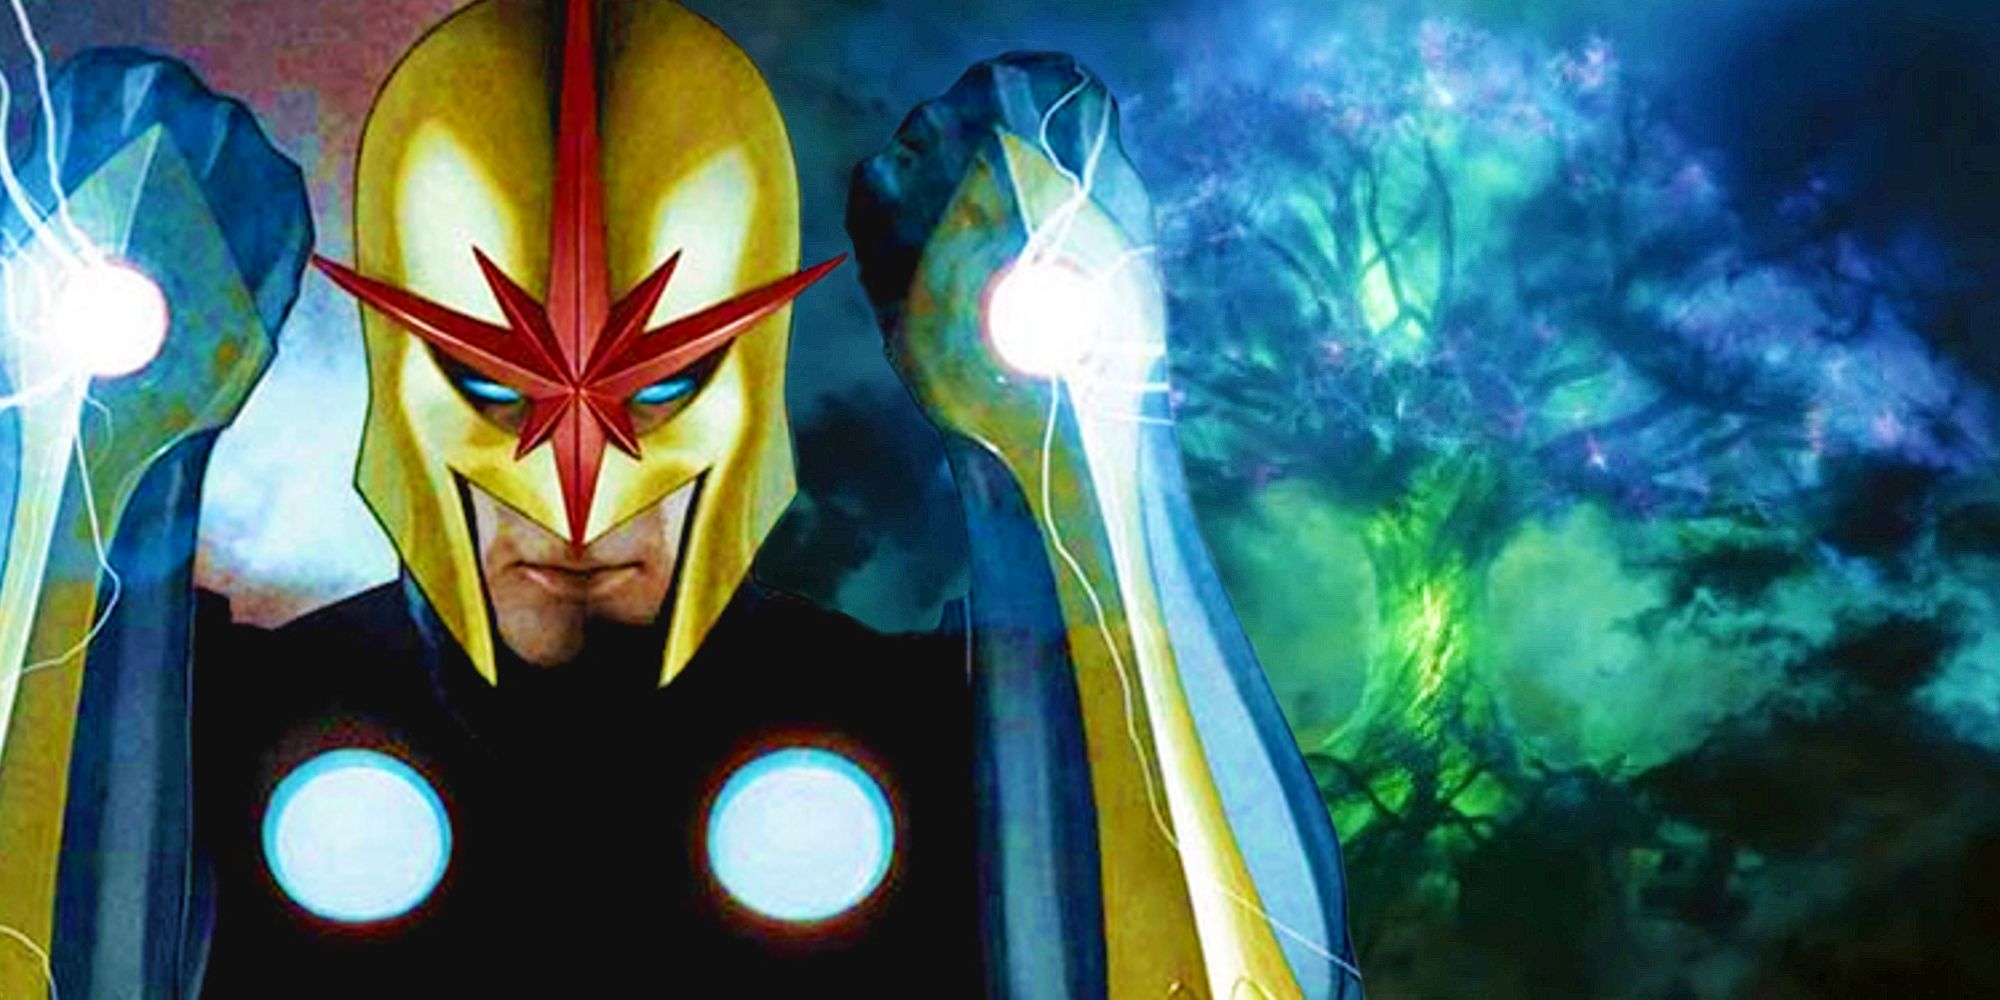 Nova from Marvel Comics next to the MCU's Multiverse Tree from Loki season 2